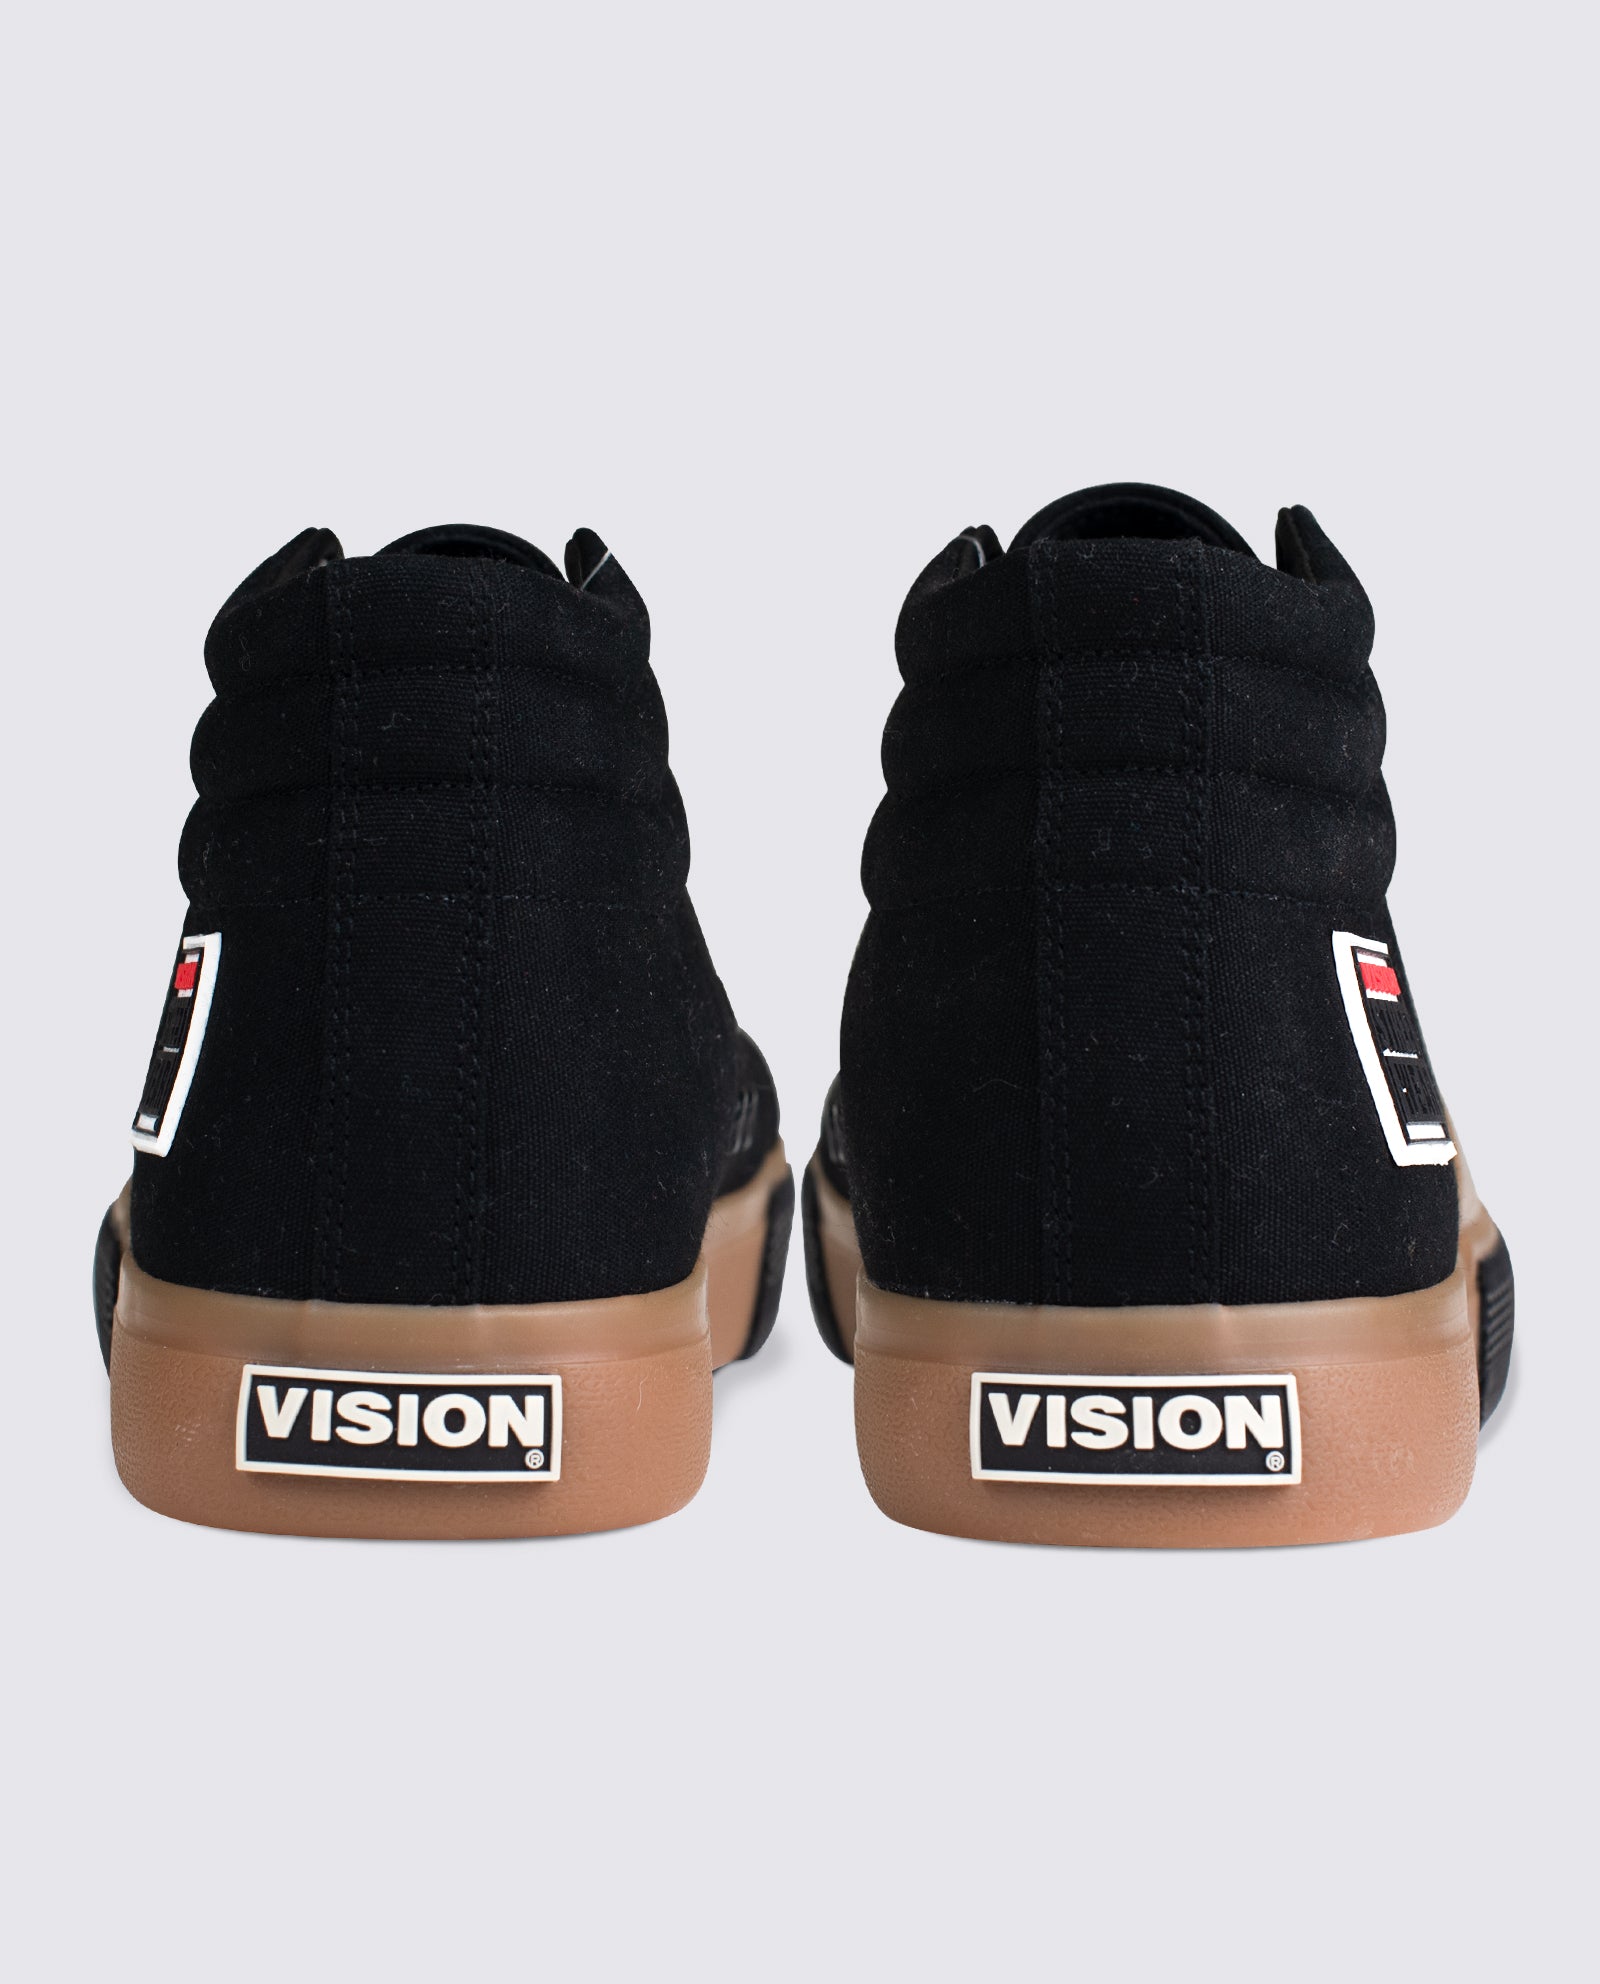 Vision Street Wear Canvas High Top Skateboard Sneakers Black